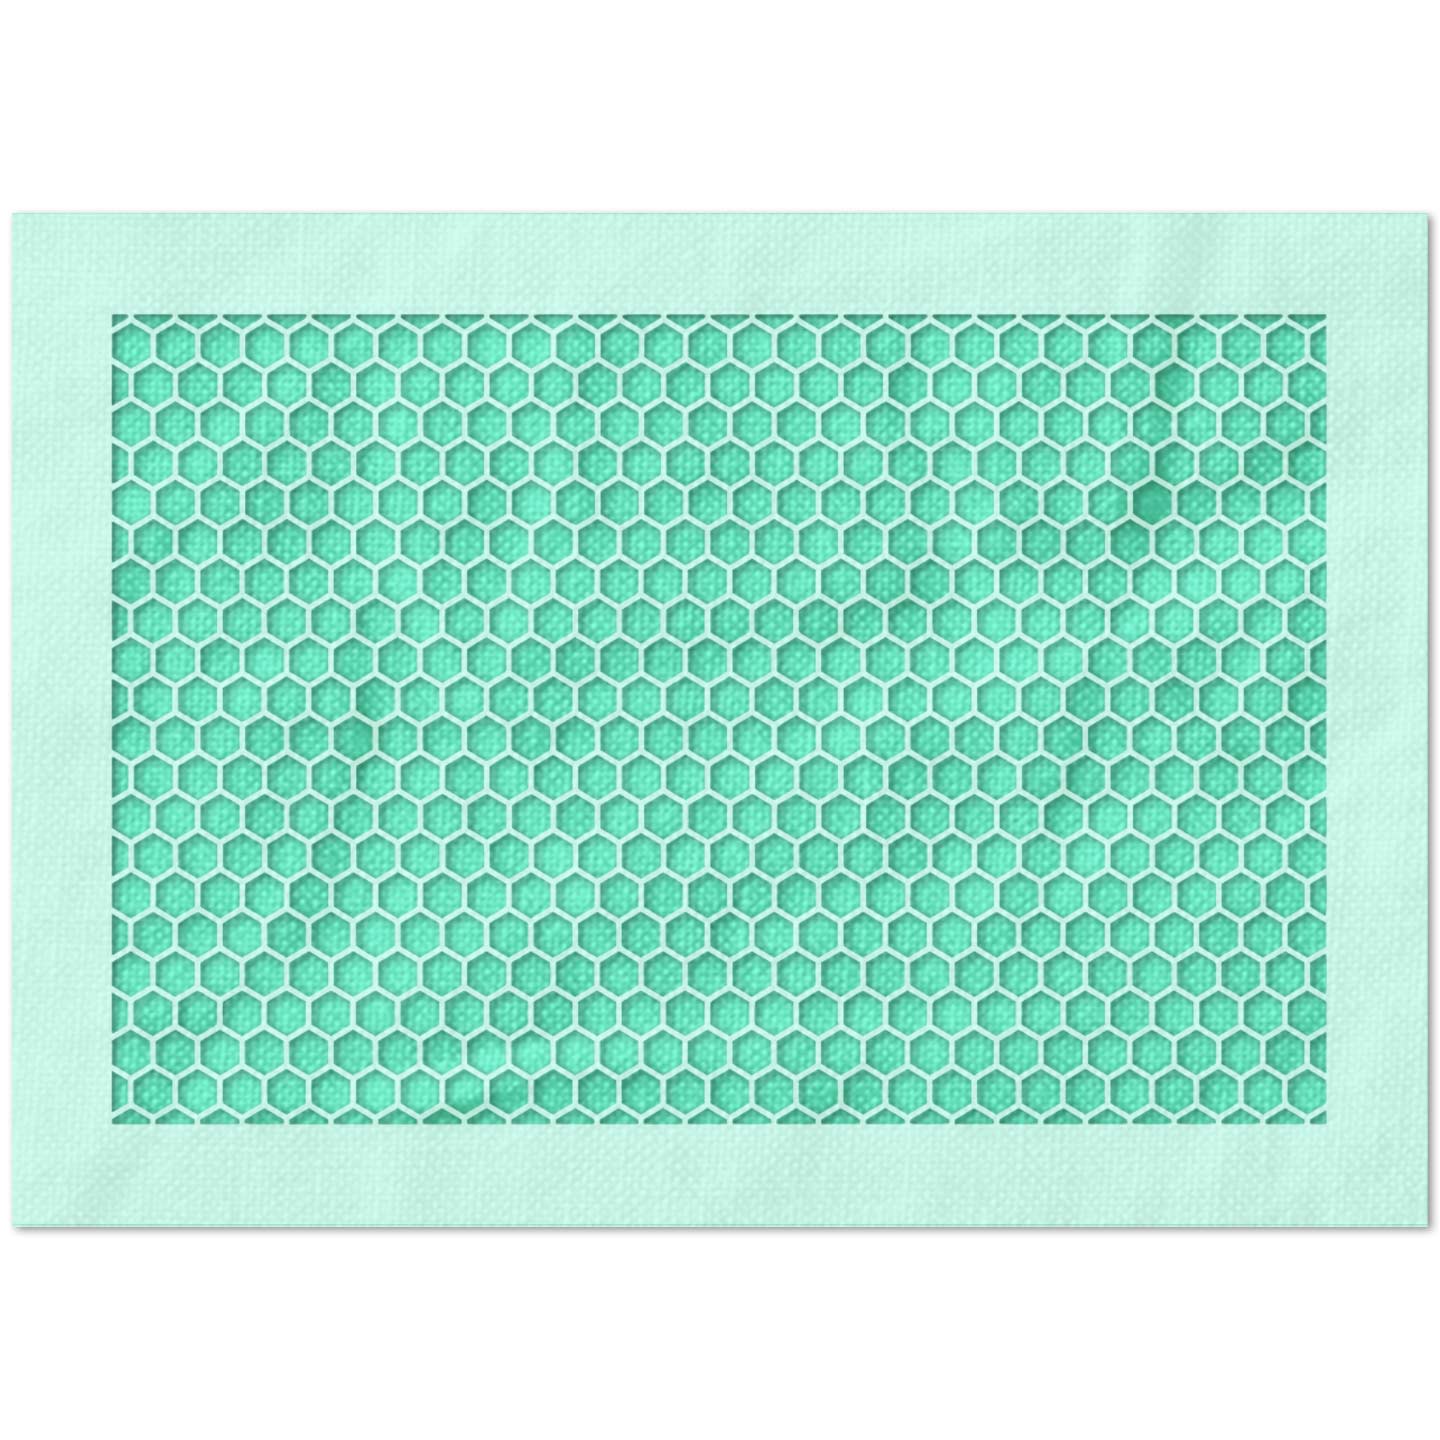 Hexagonal Honeycomb Pattern Stencil